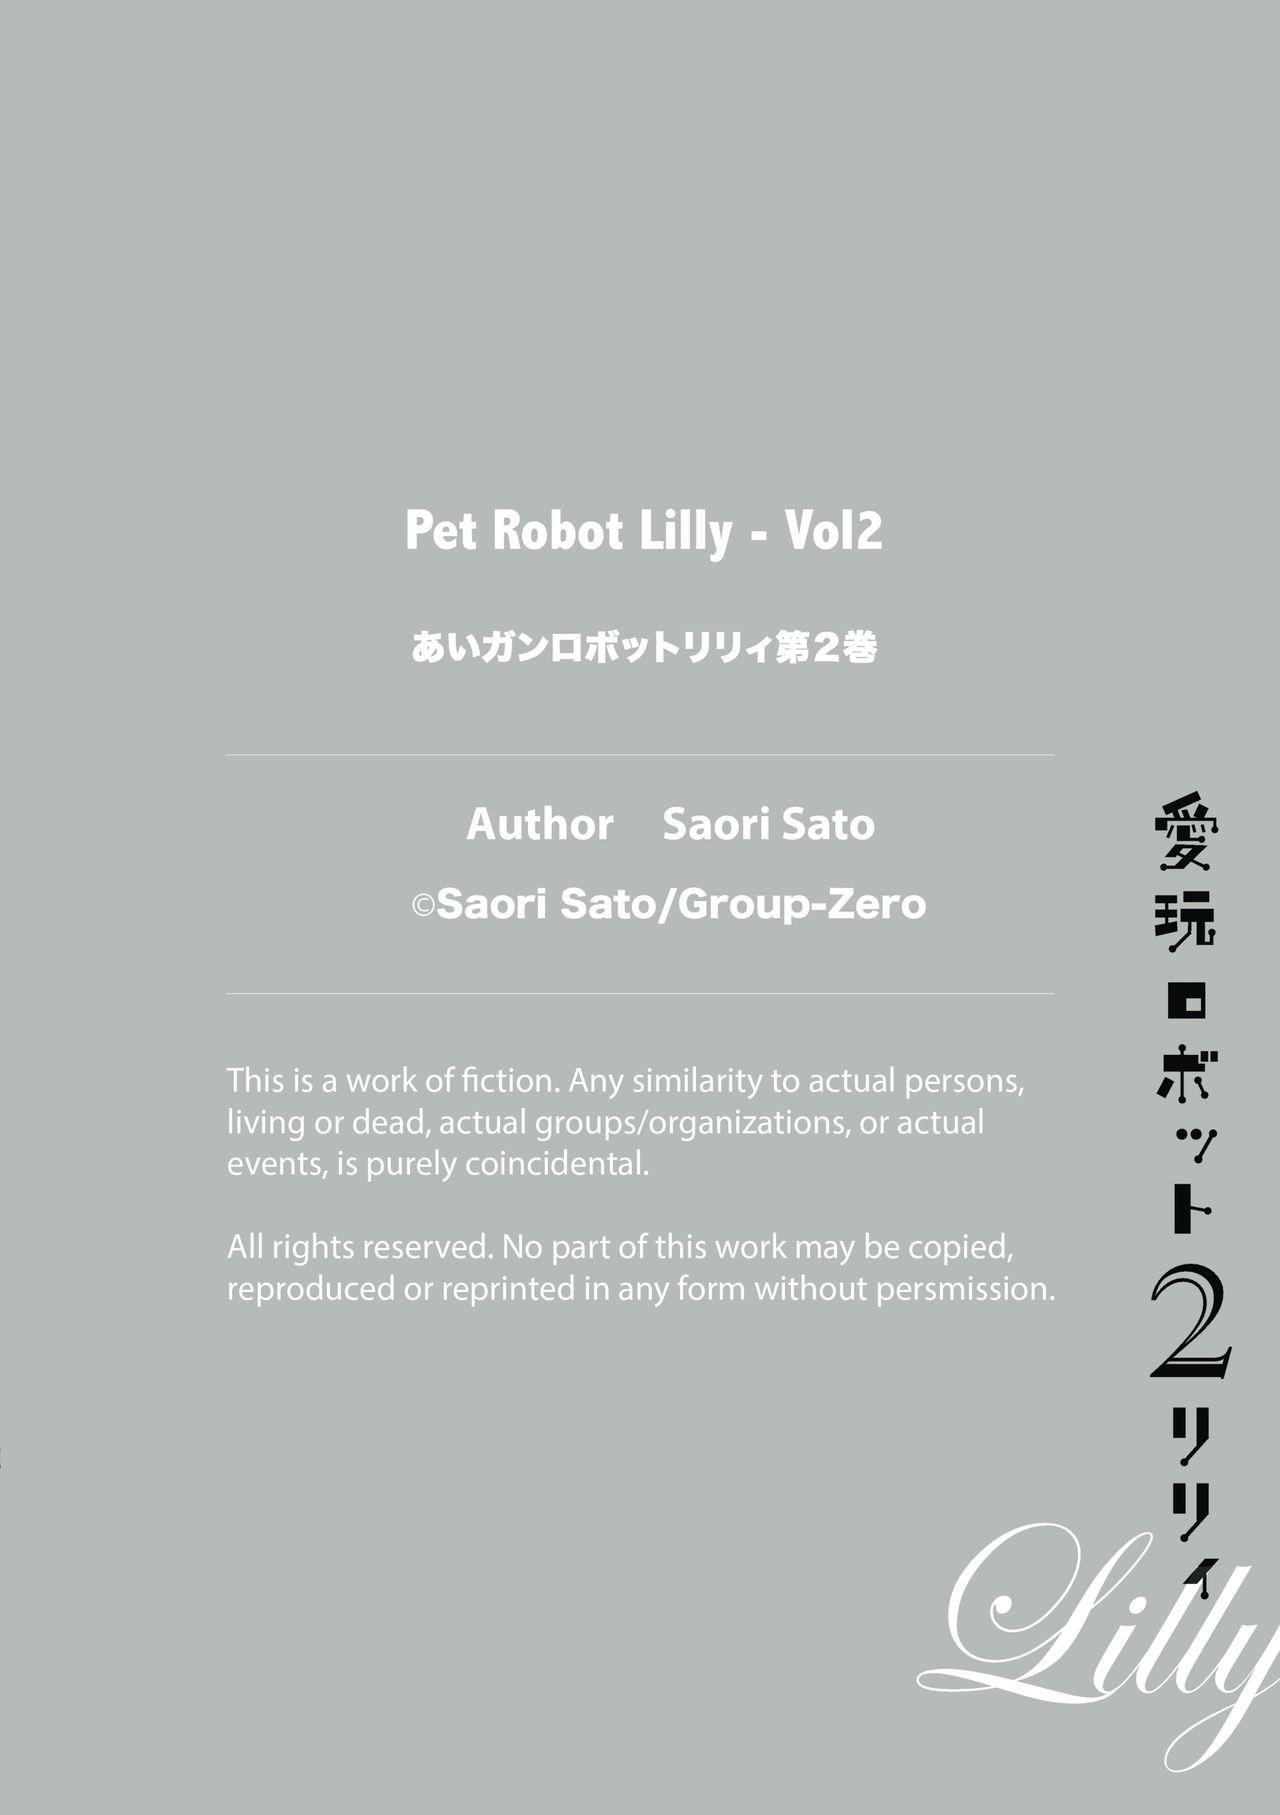 Arrecha Aigan Robot Lilly - Pet Robot Lilly Vol. 2 Sentando - Page 152